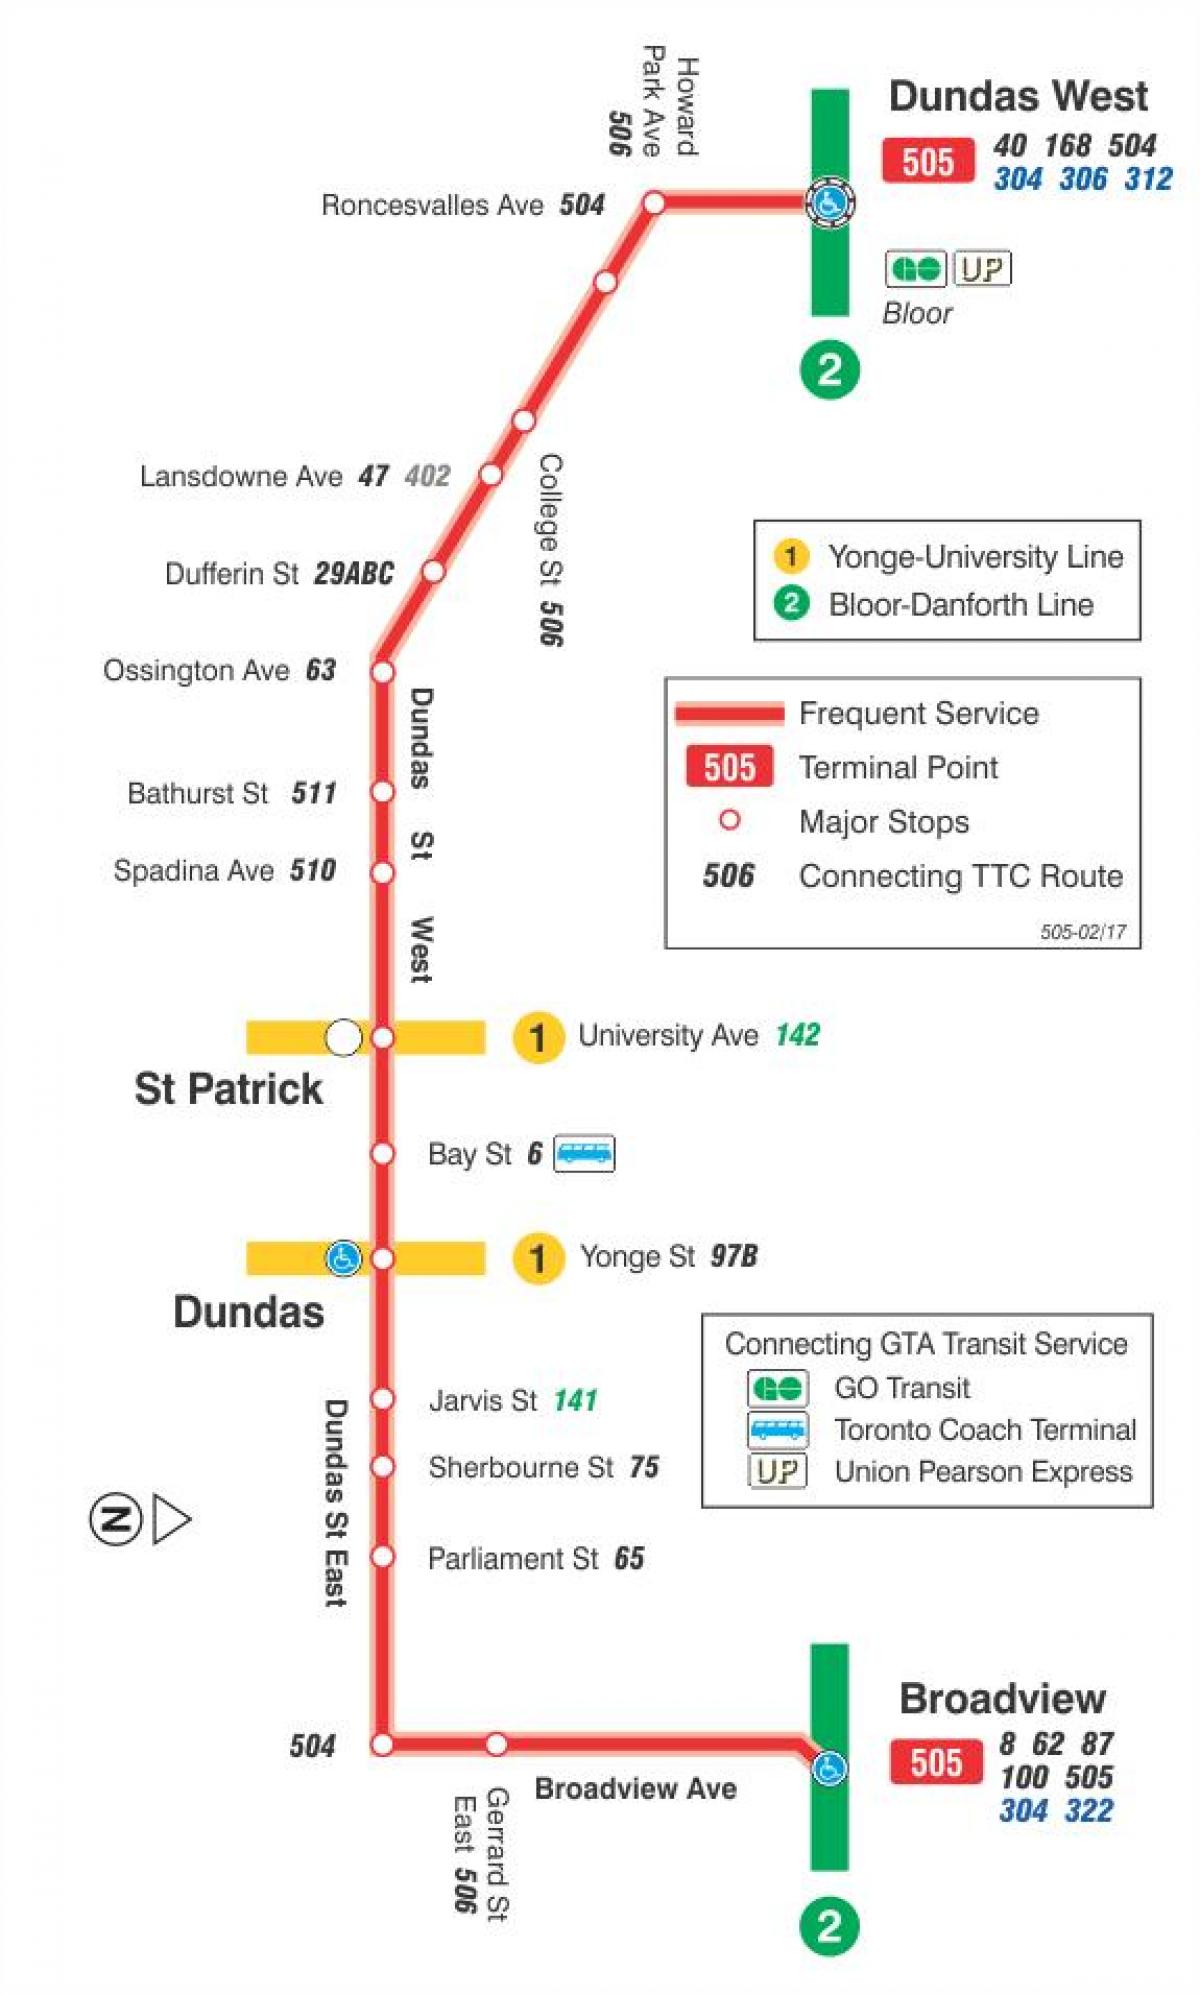 Kort over sporvogn linje 505 Dundas